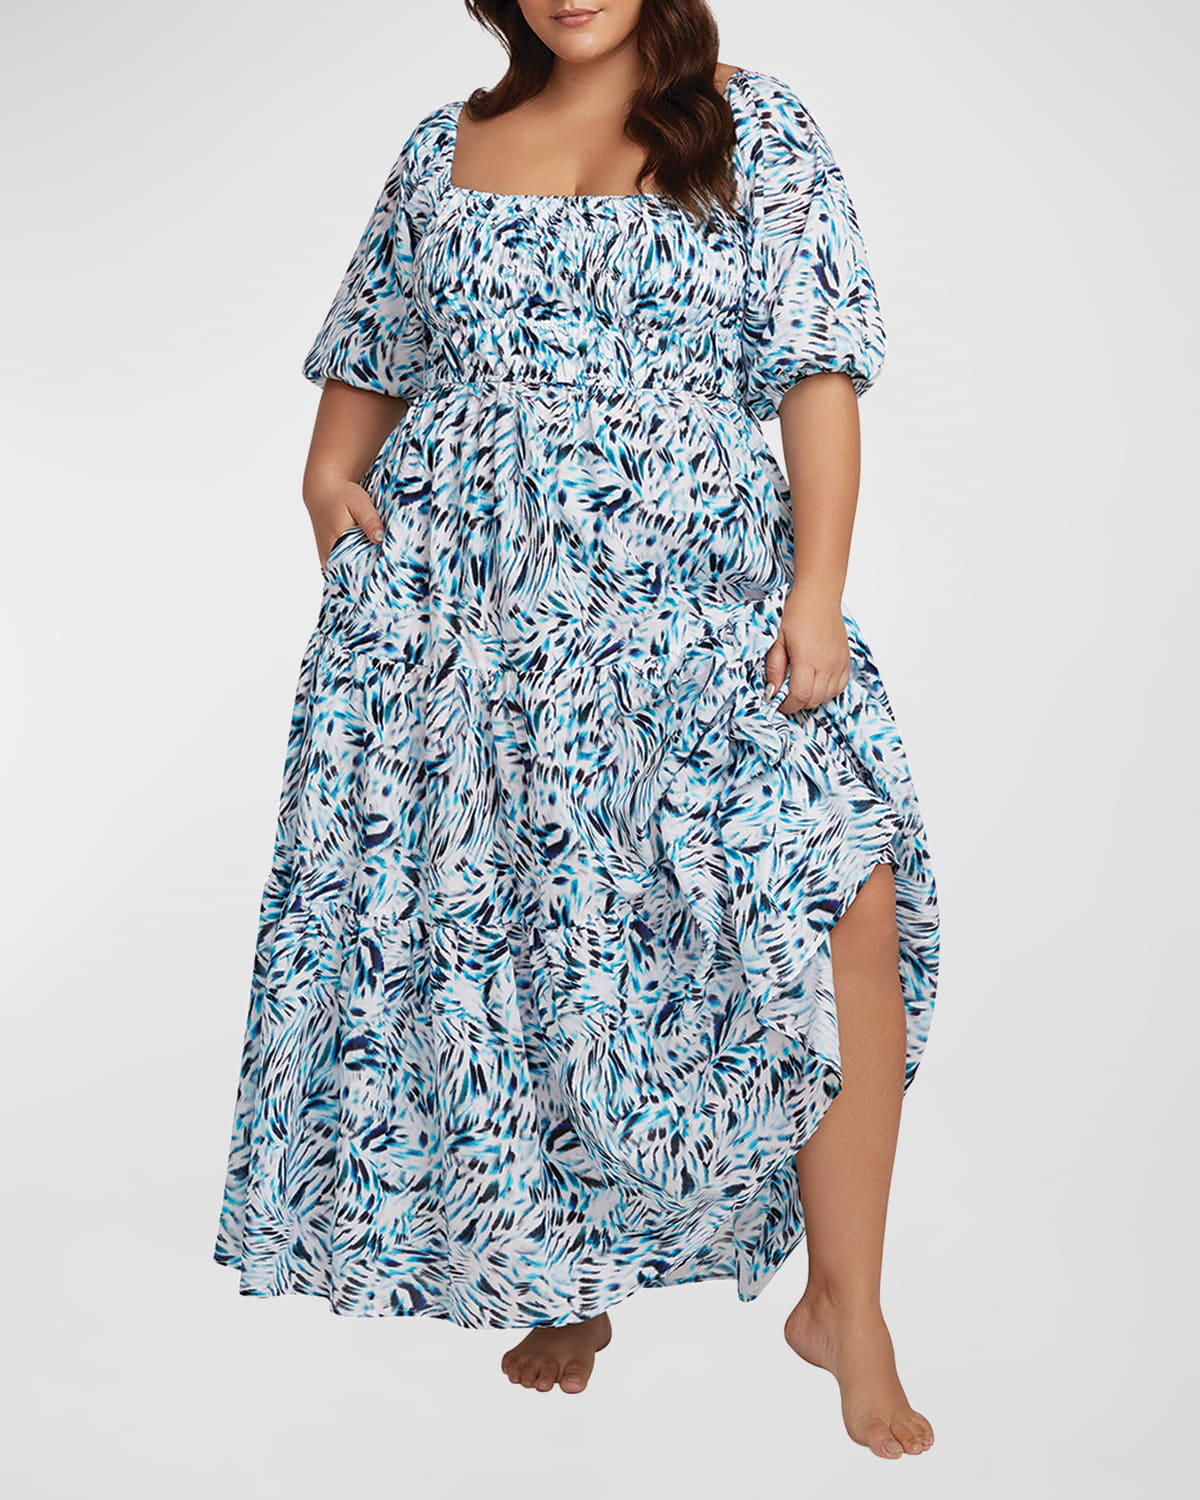 Artesands Plus Size Ze Blu Handel Maxi Dress In White